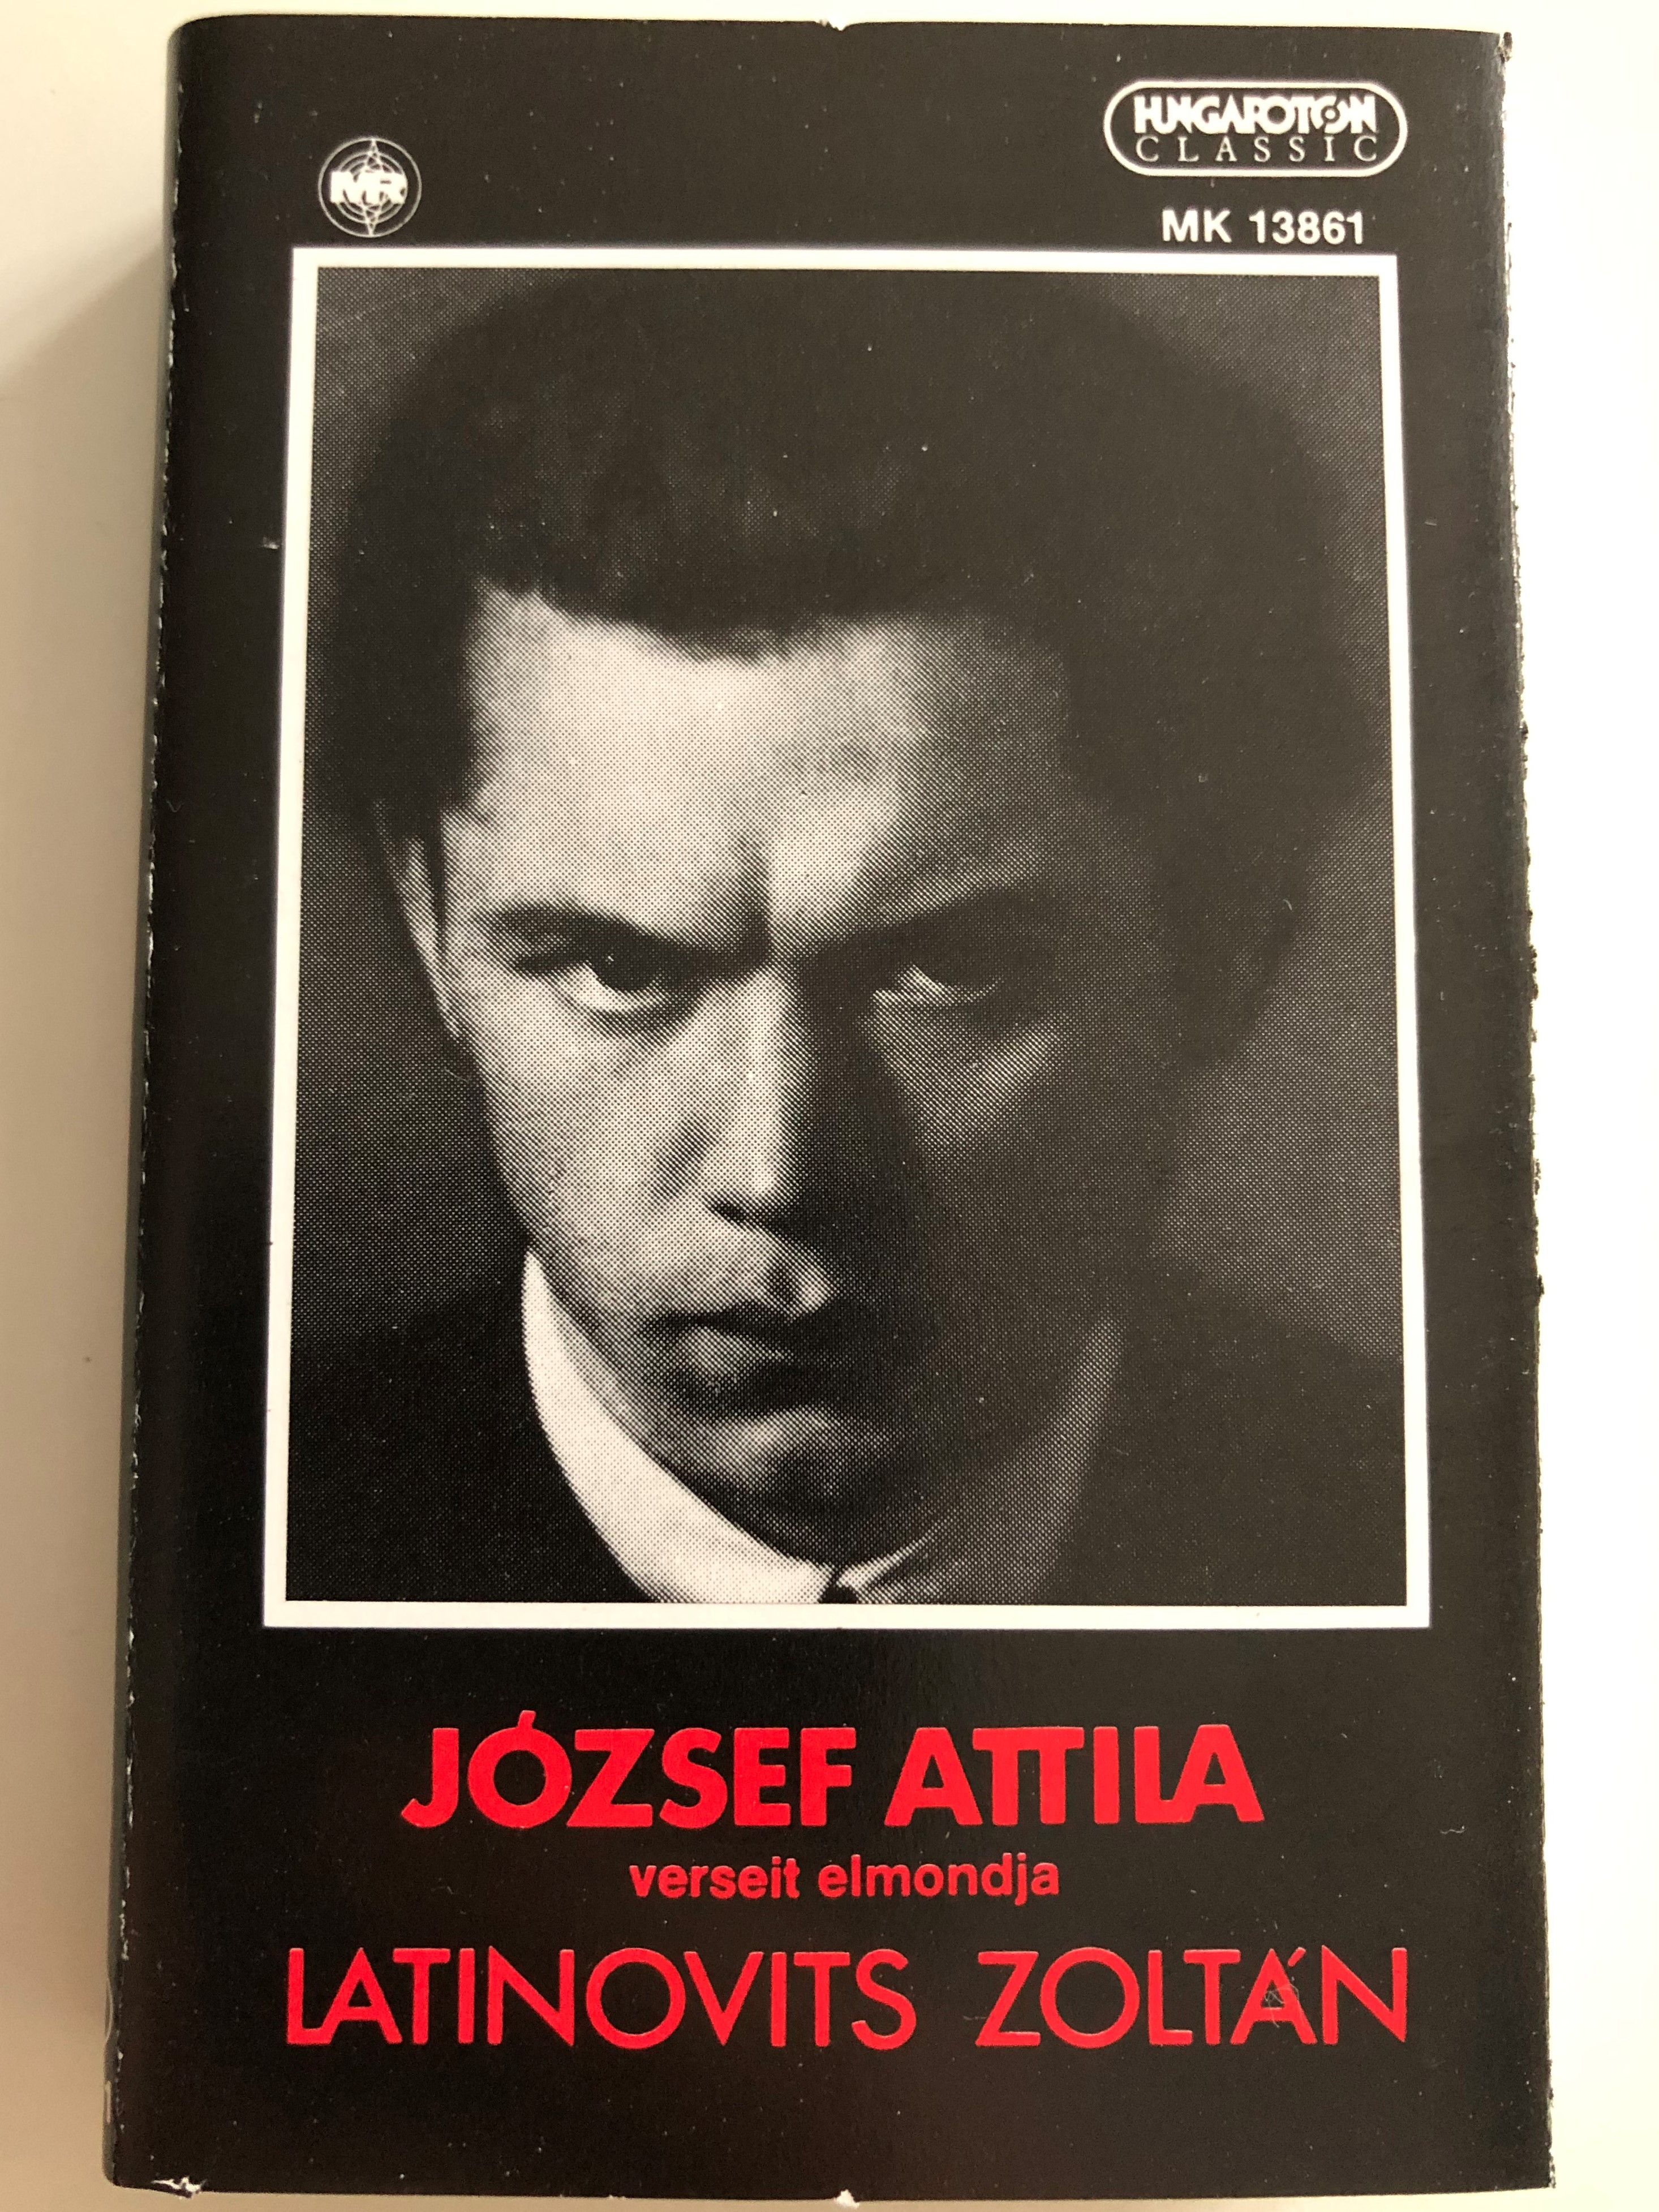 j-zsef-attila-latinovits-zolt-n-hungaroton-cassette-stereo-mk-13861-1-.jpg